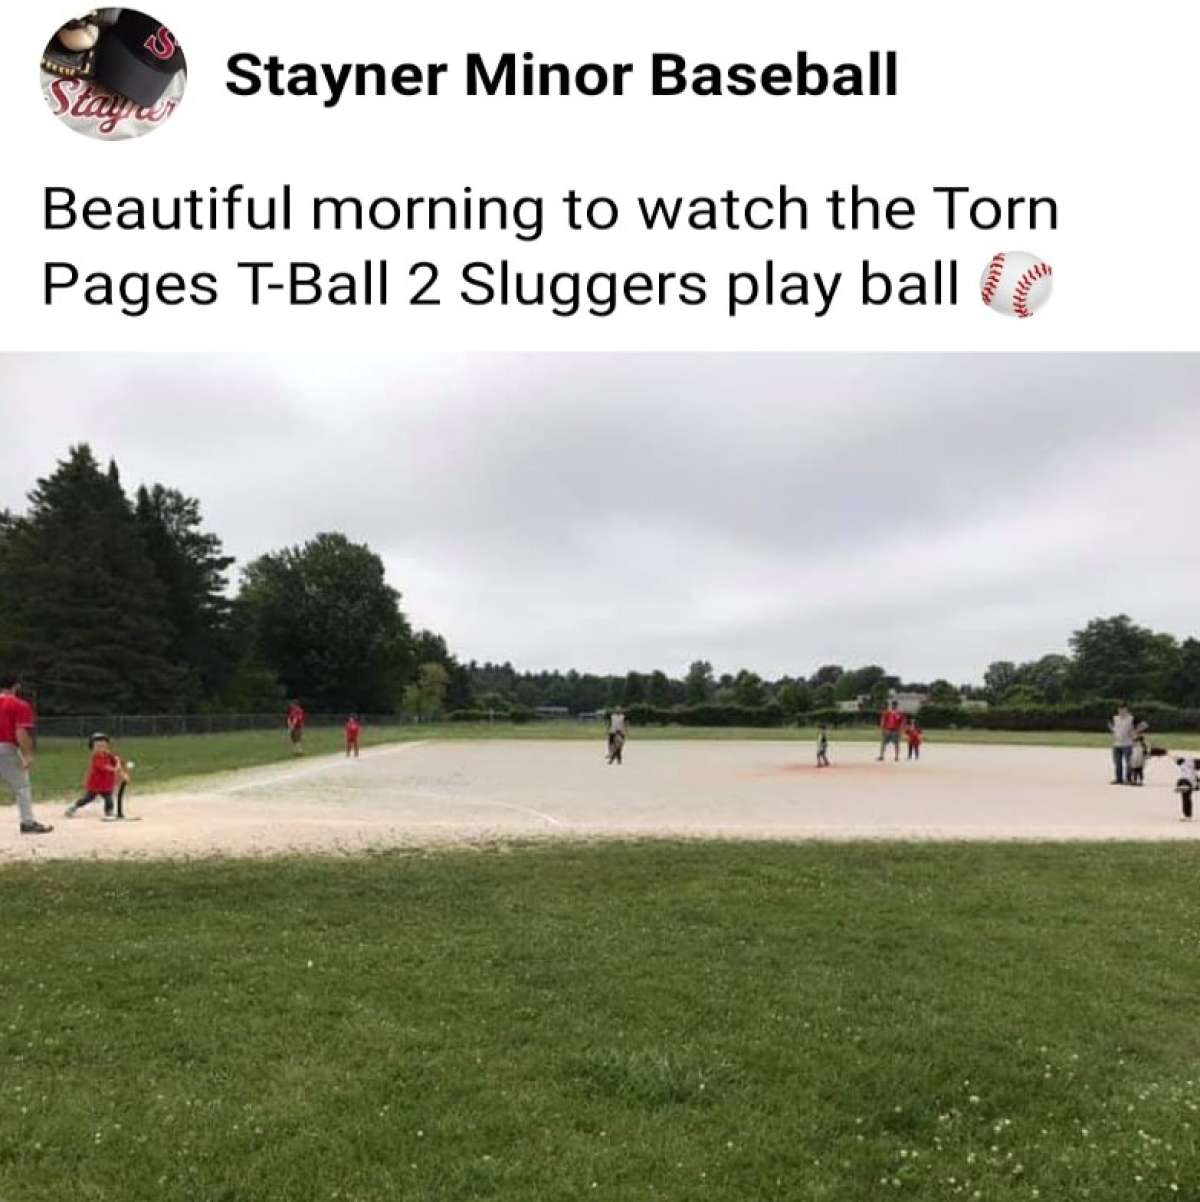 Proud to sponsor the 2019 Stayner Minor Baseball T-Ball 2 Sluggers Team